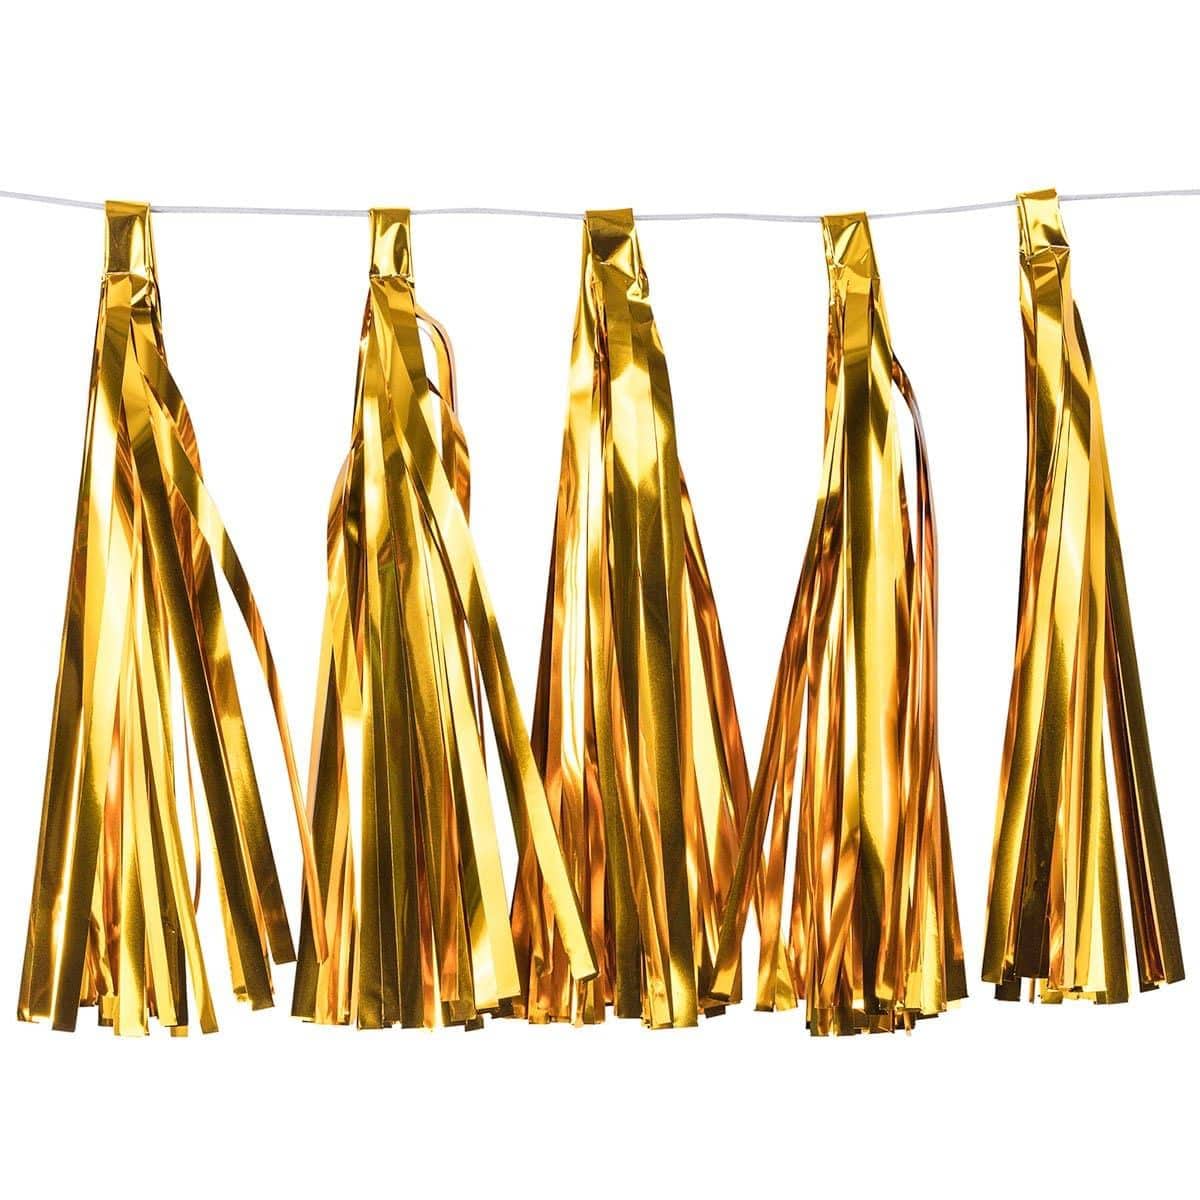 Buy Decorations Tassels Garland Silk Paper Assembled 10/Pkg - Metallic Gold sold at Party Expert